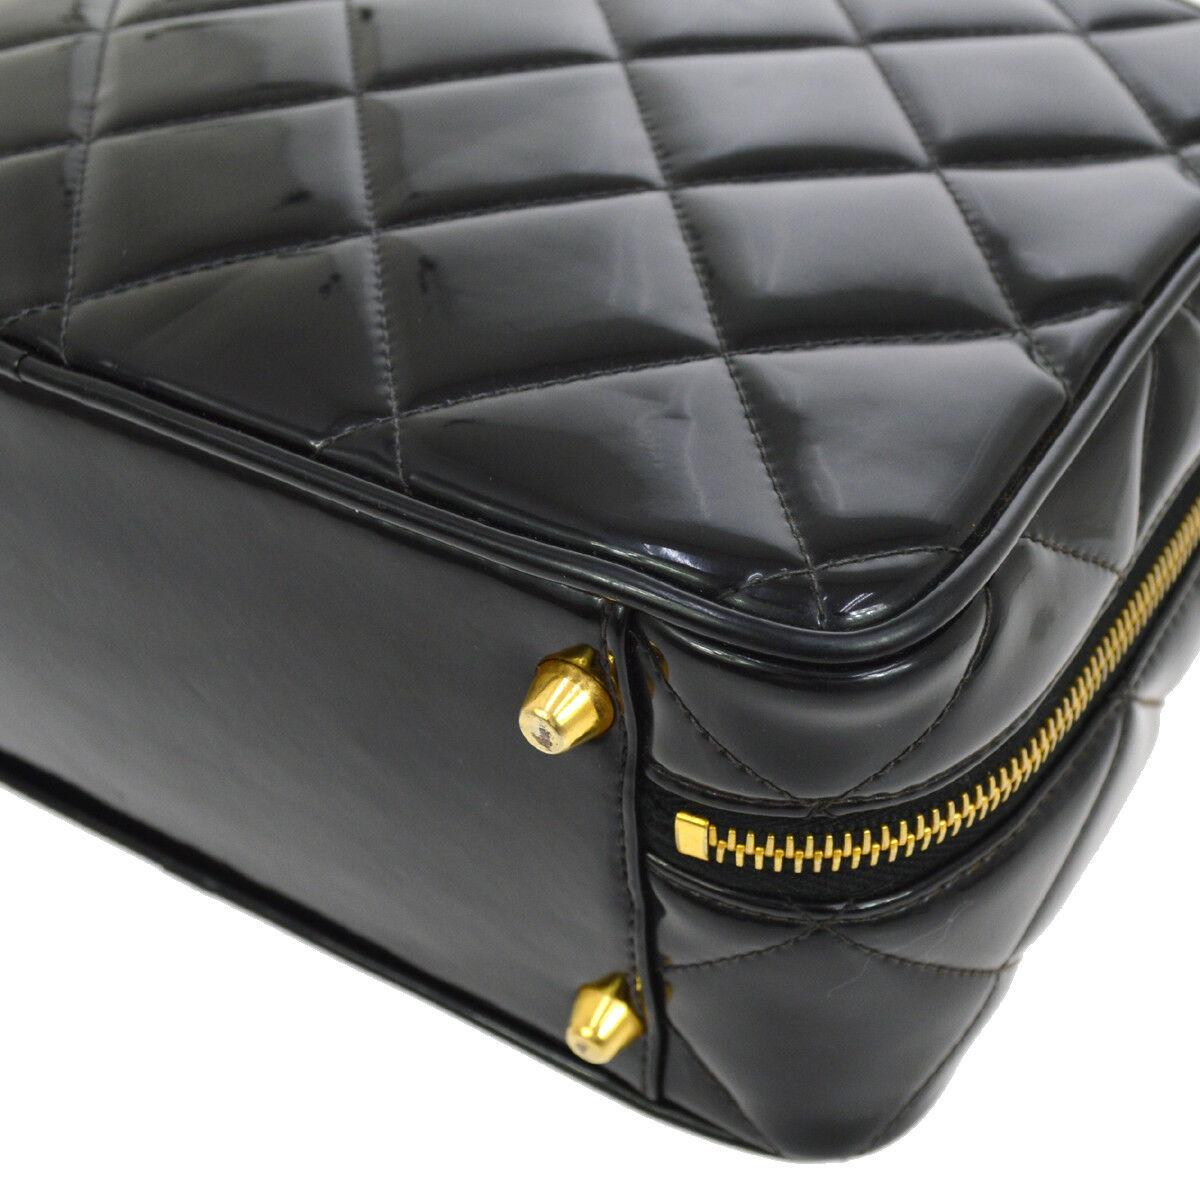 Chanel Black Patent Leather Lunch Travel Top Handle Satchel Tote Shoulder Bag 2